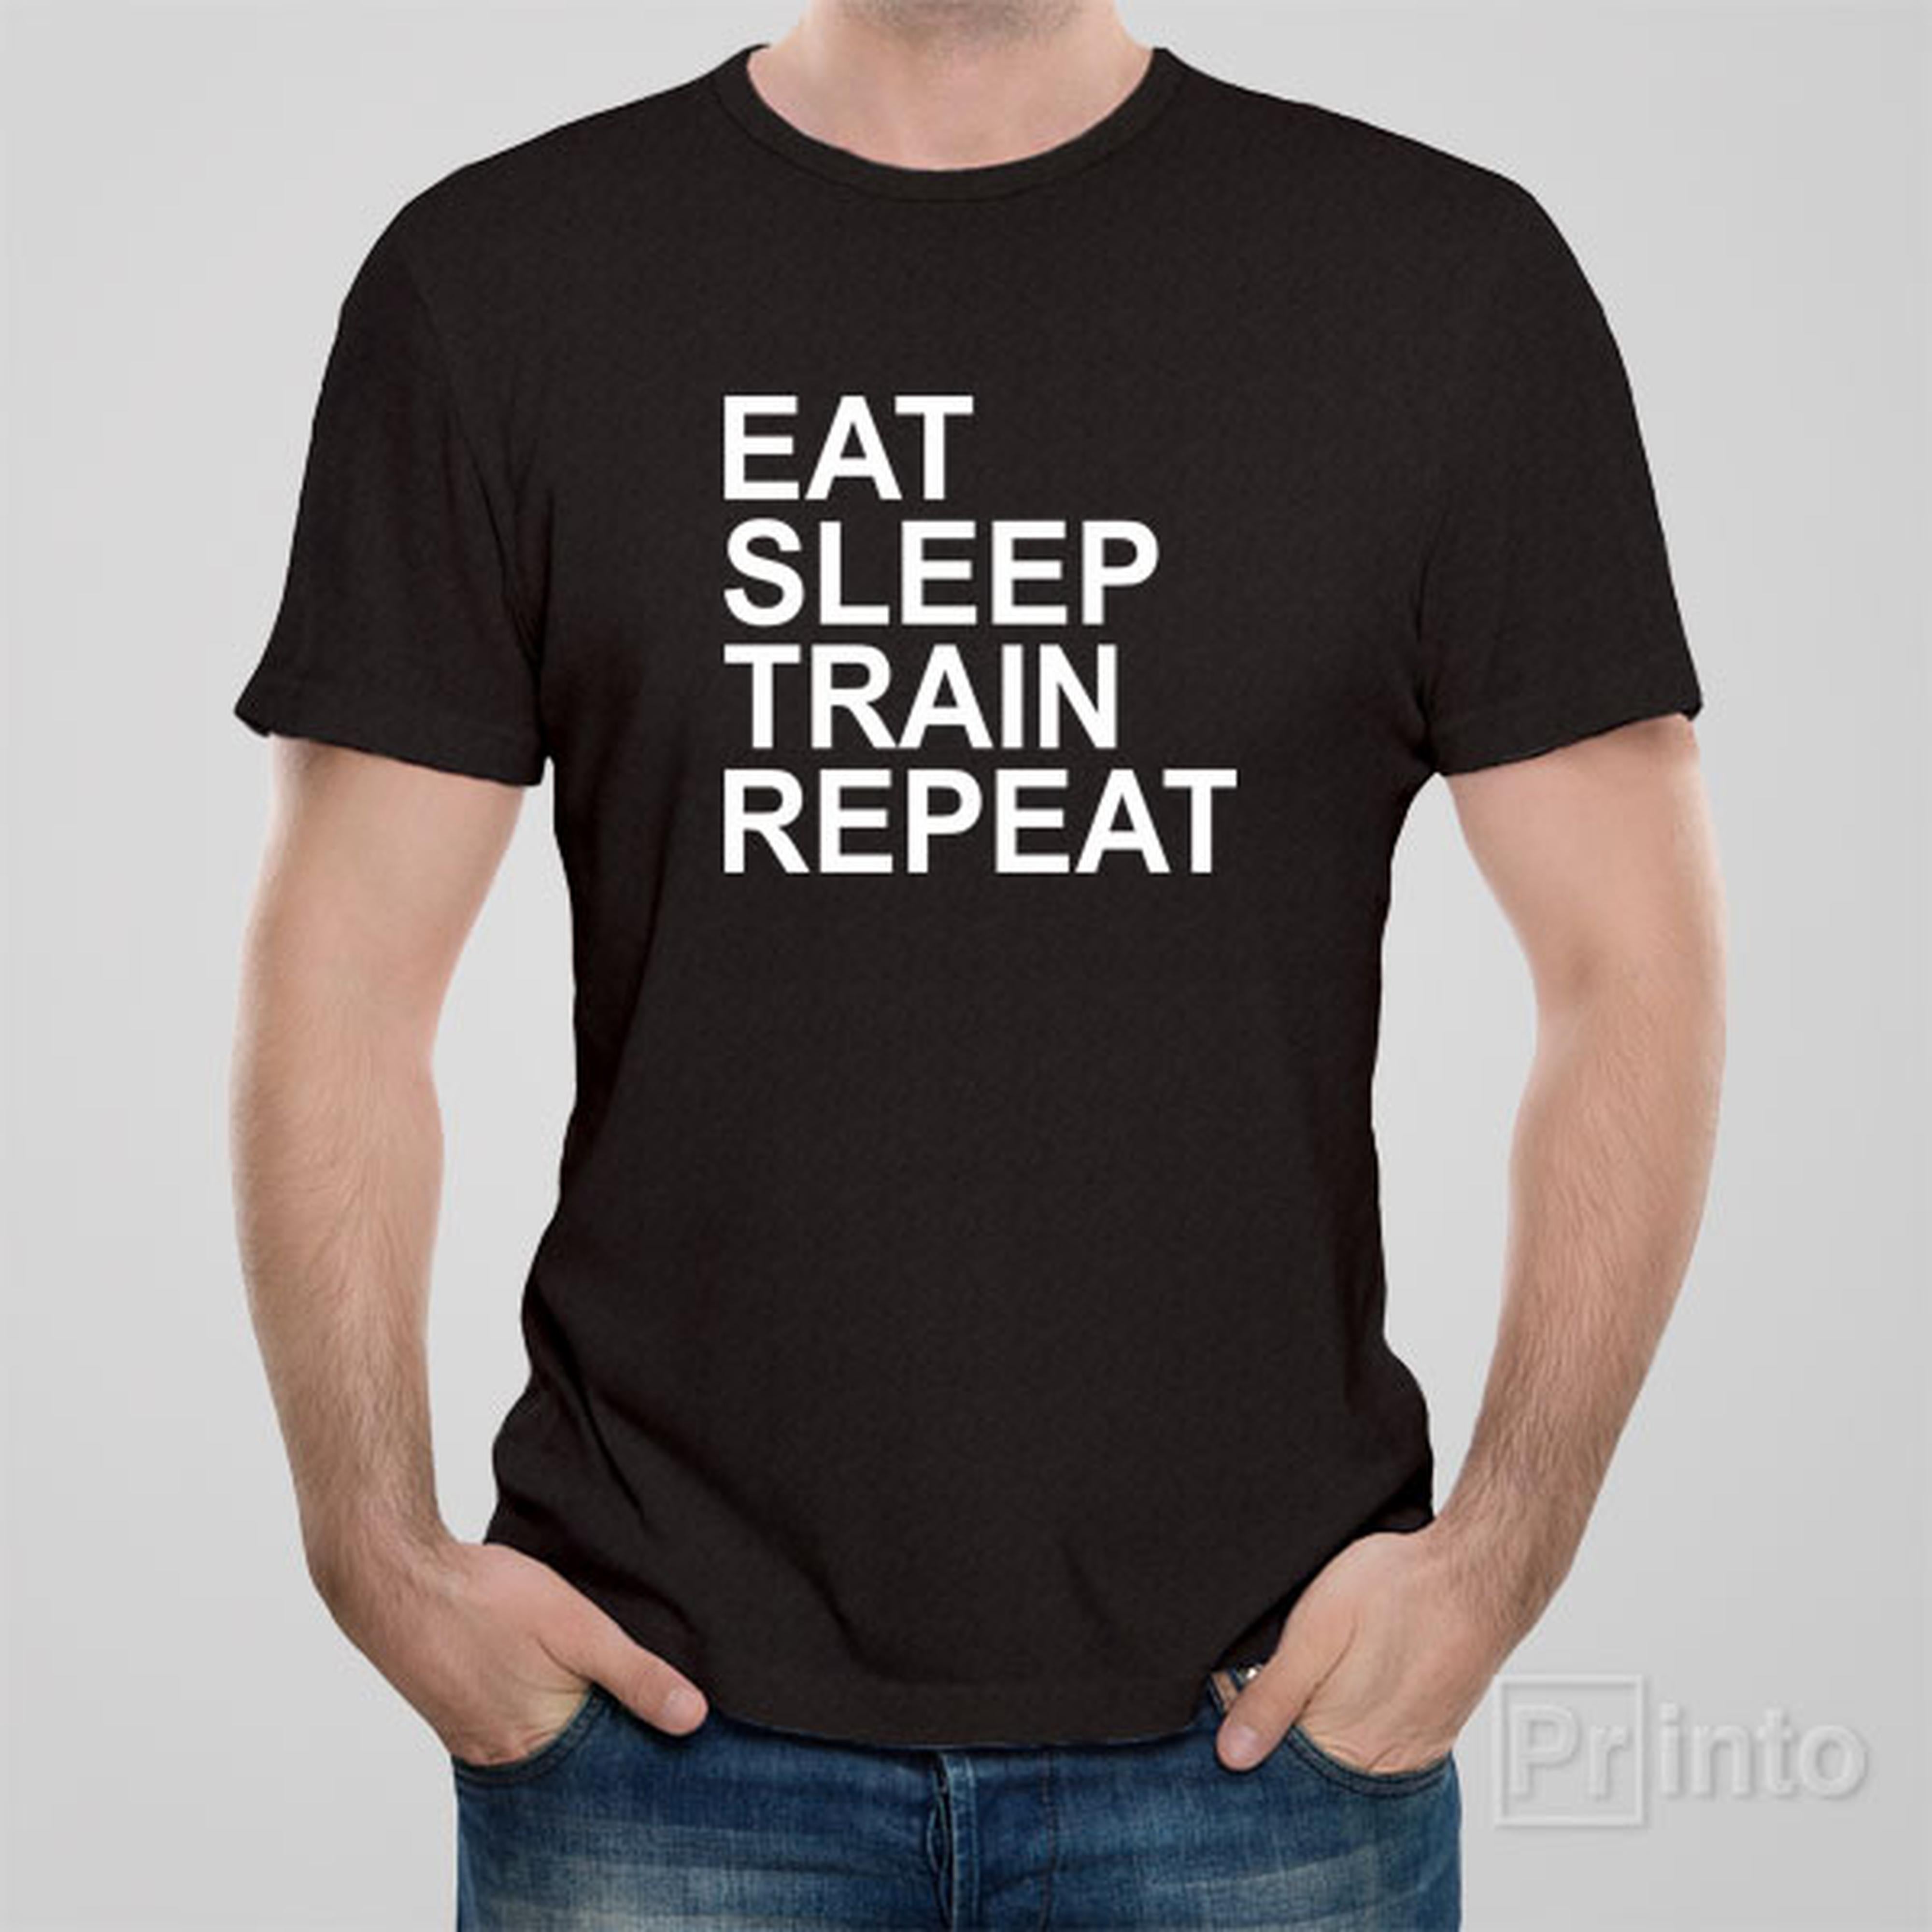 eat-sleep-train-repeat-t-shirt